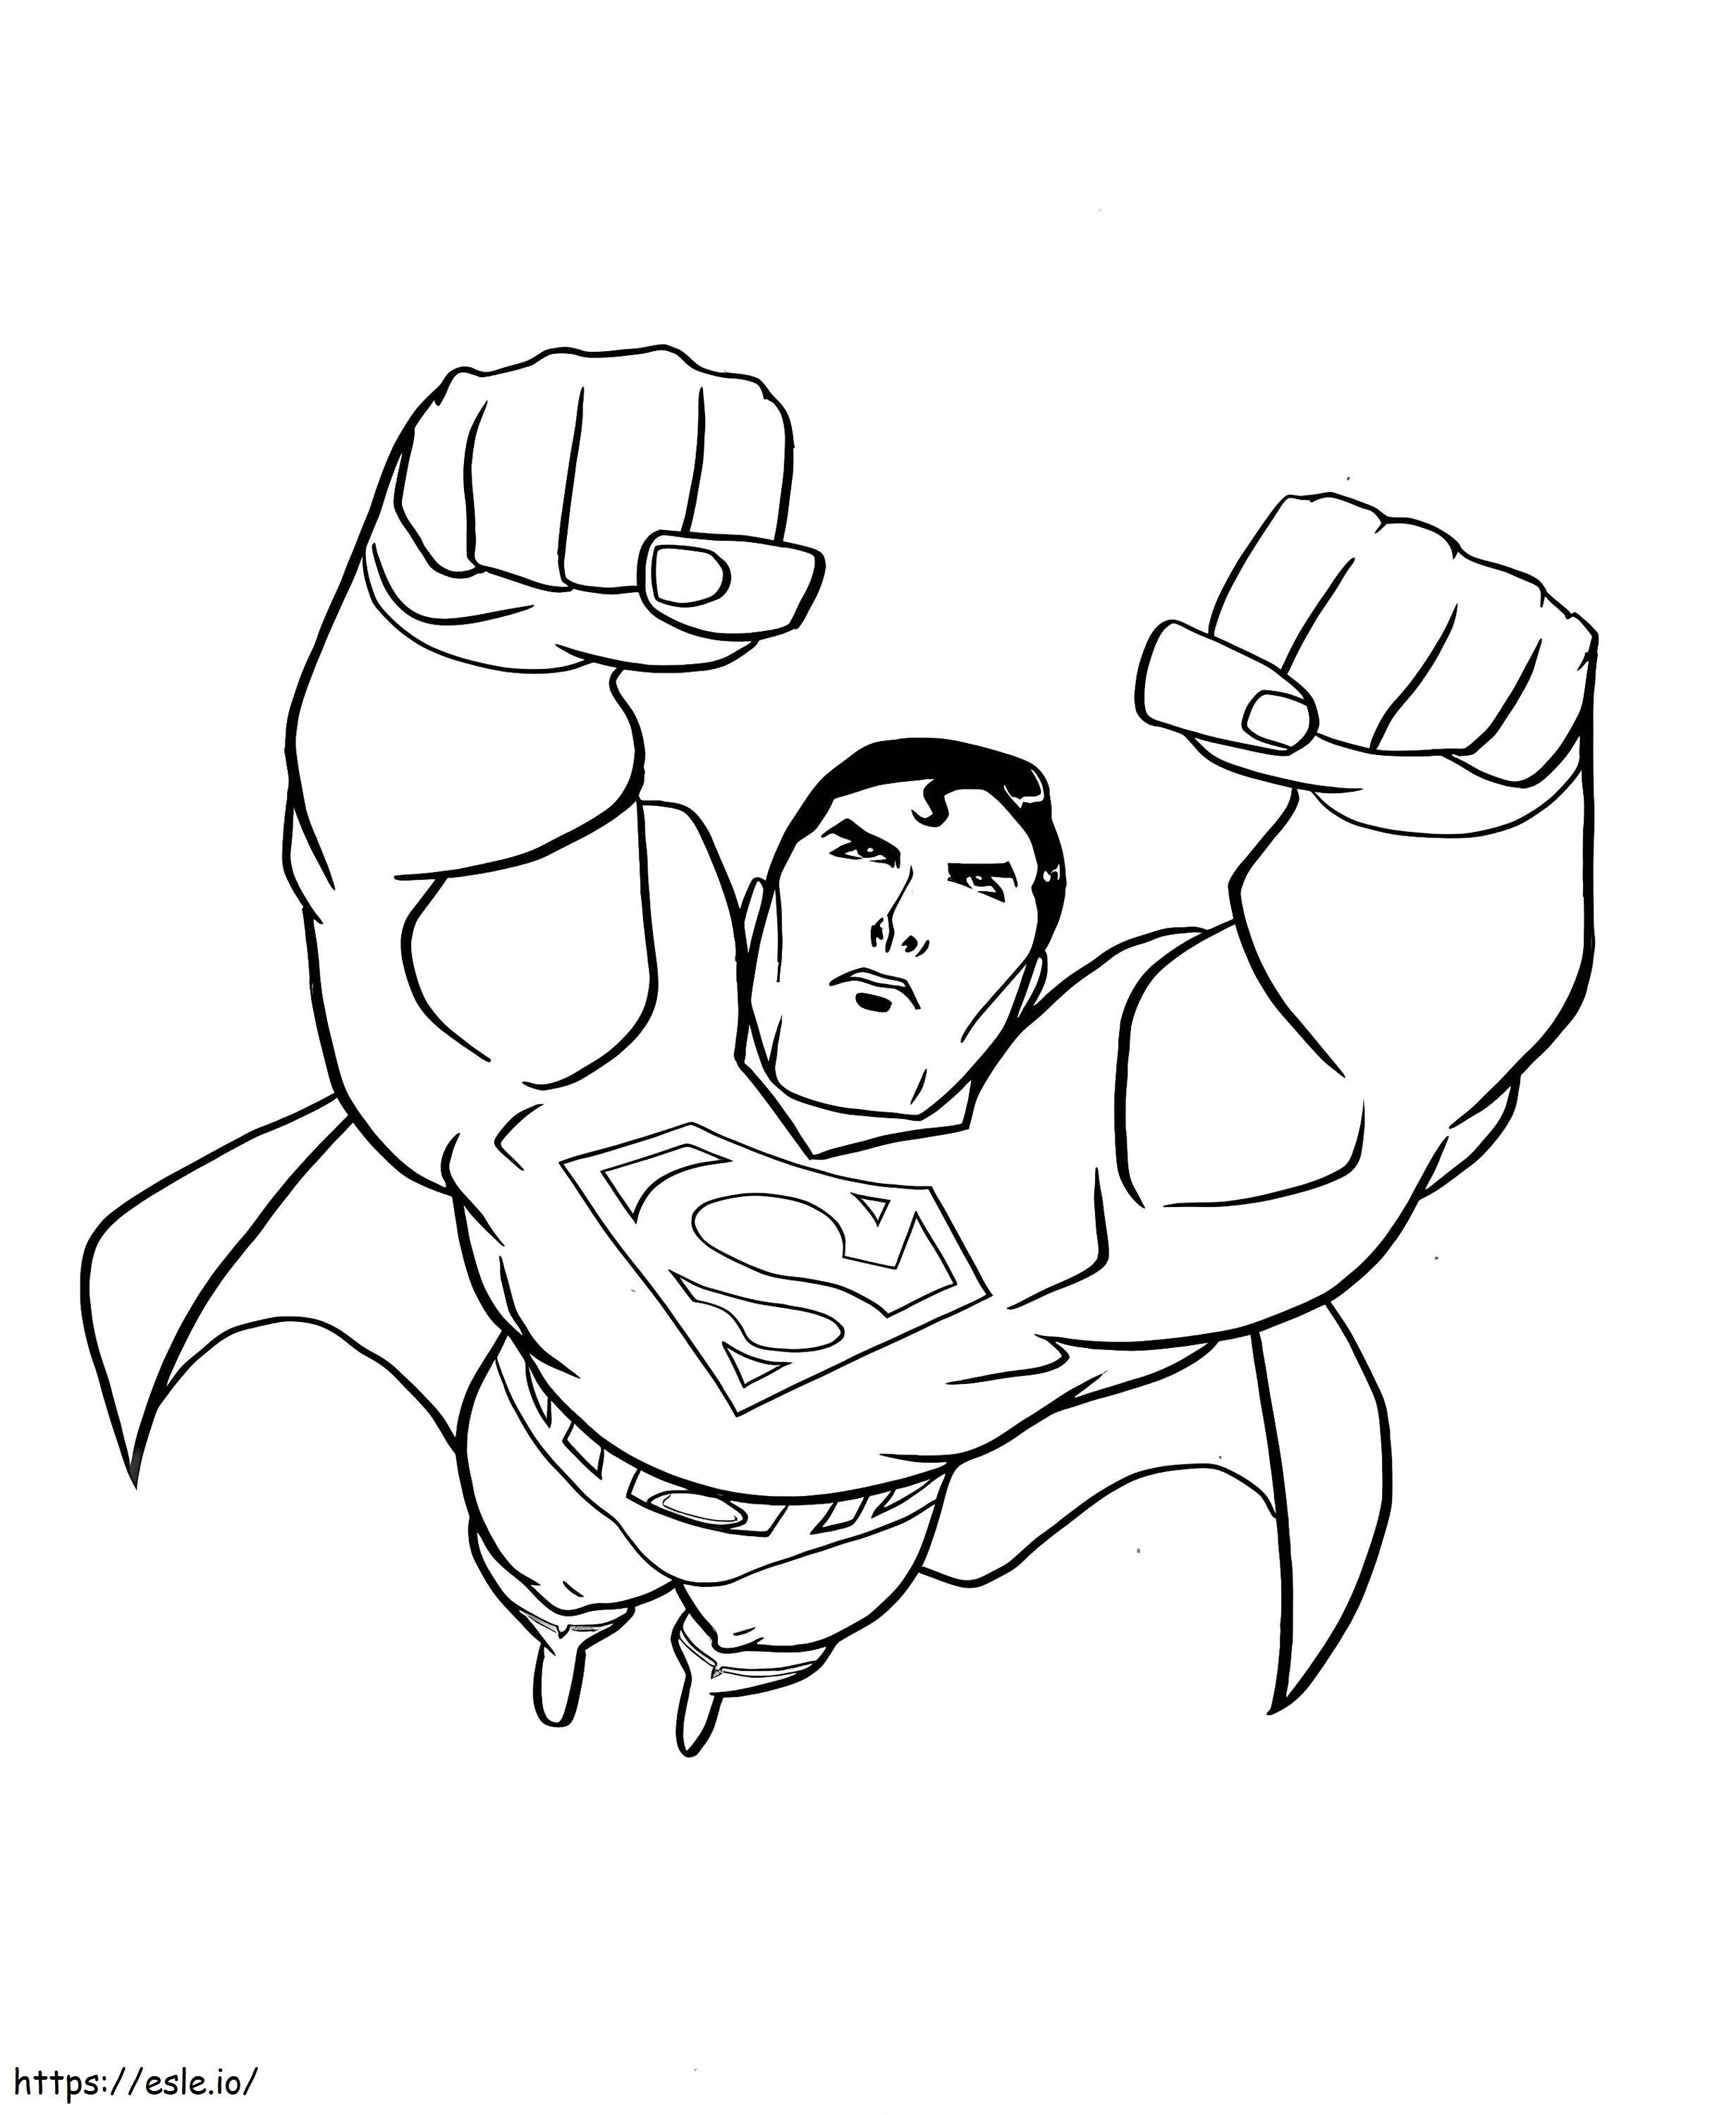 Bohater Supermana kolorowanka